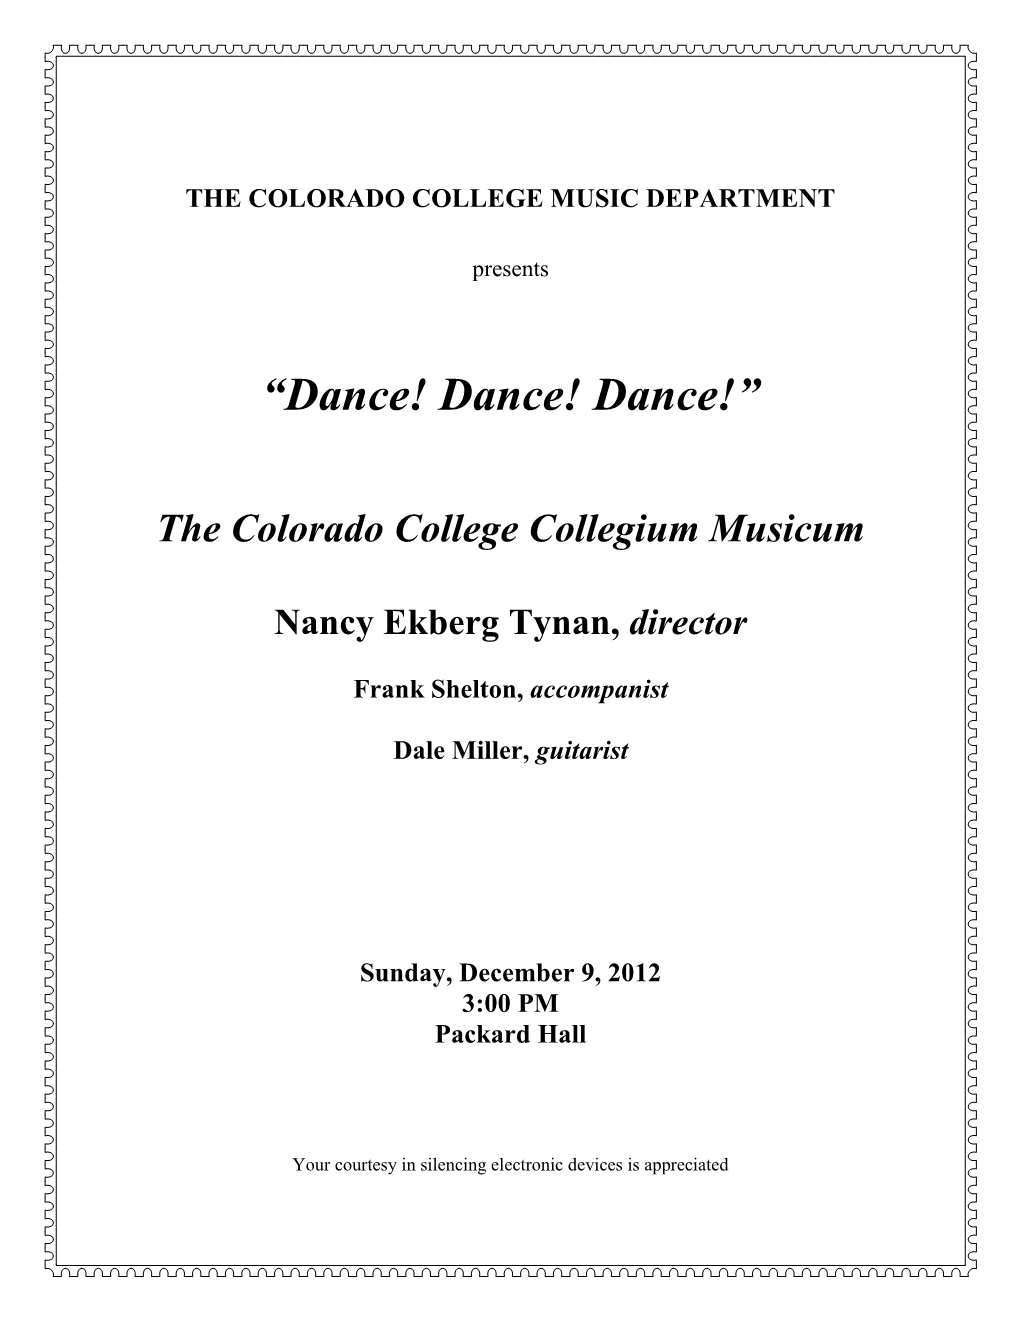 The Colorado College Music Department